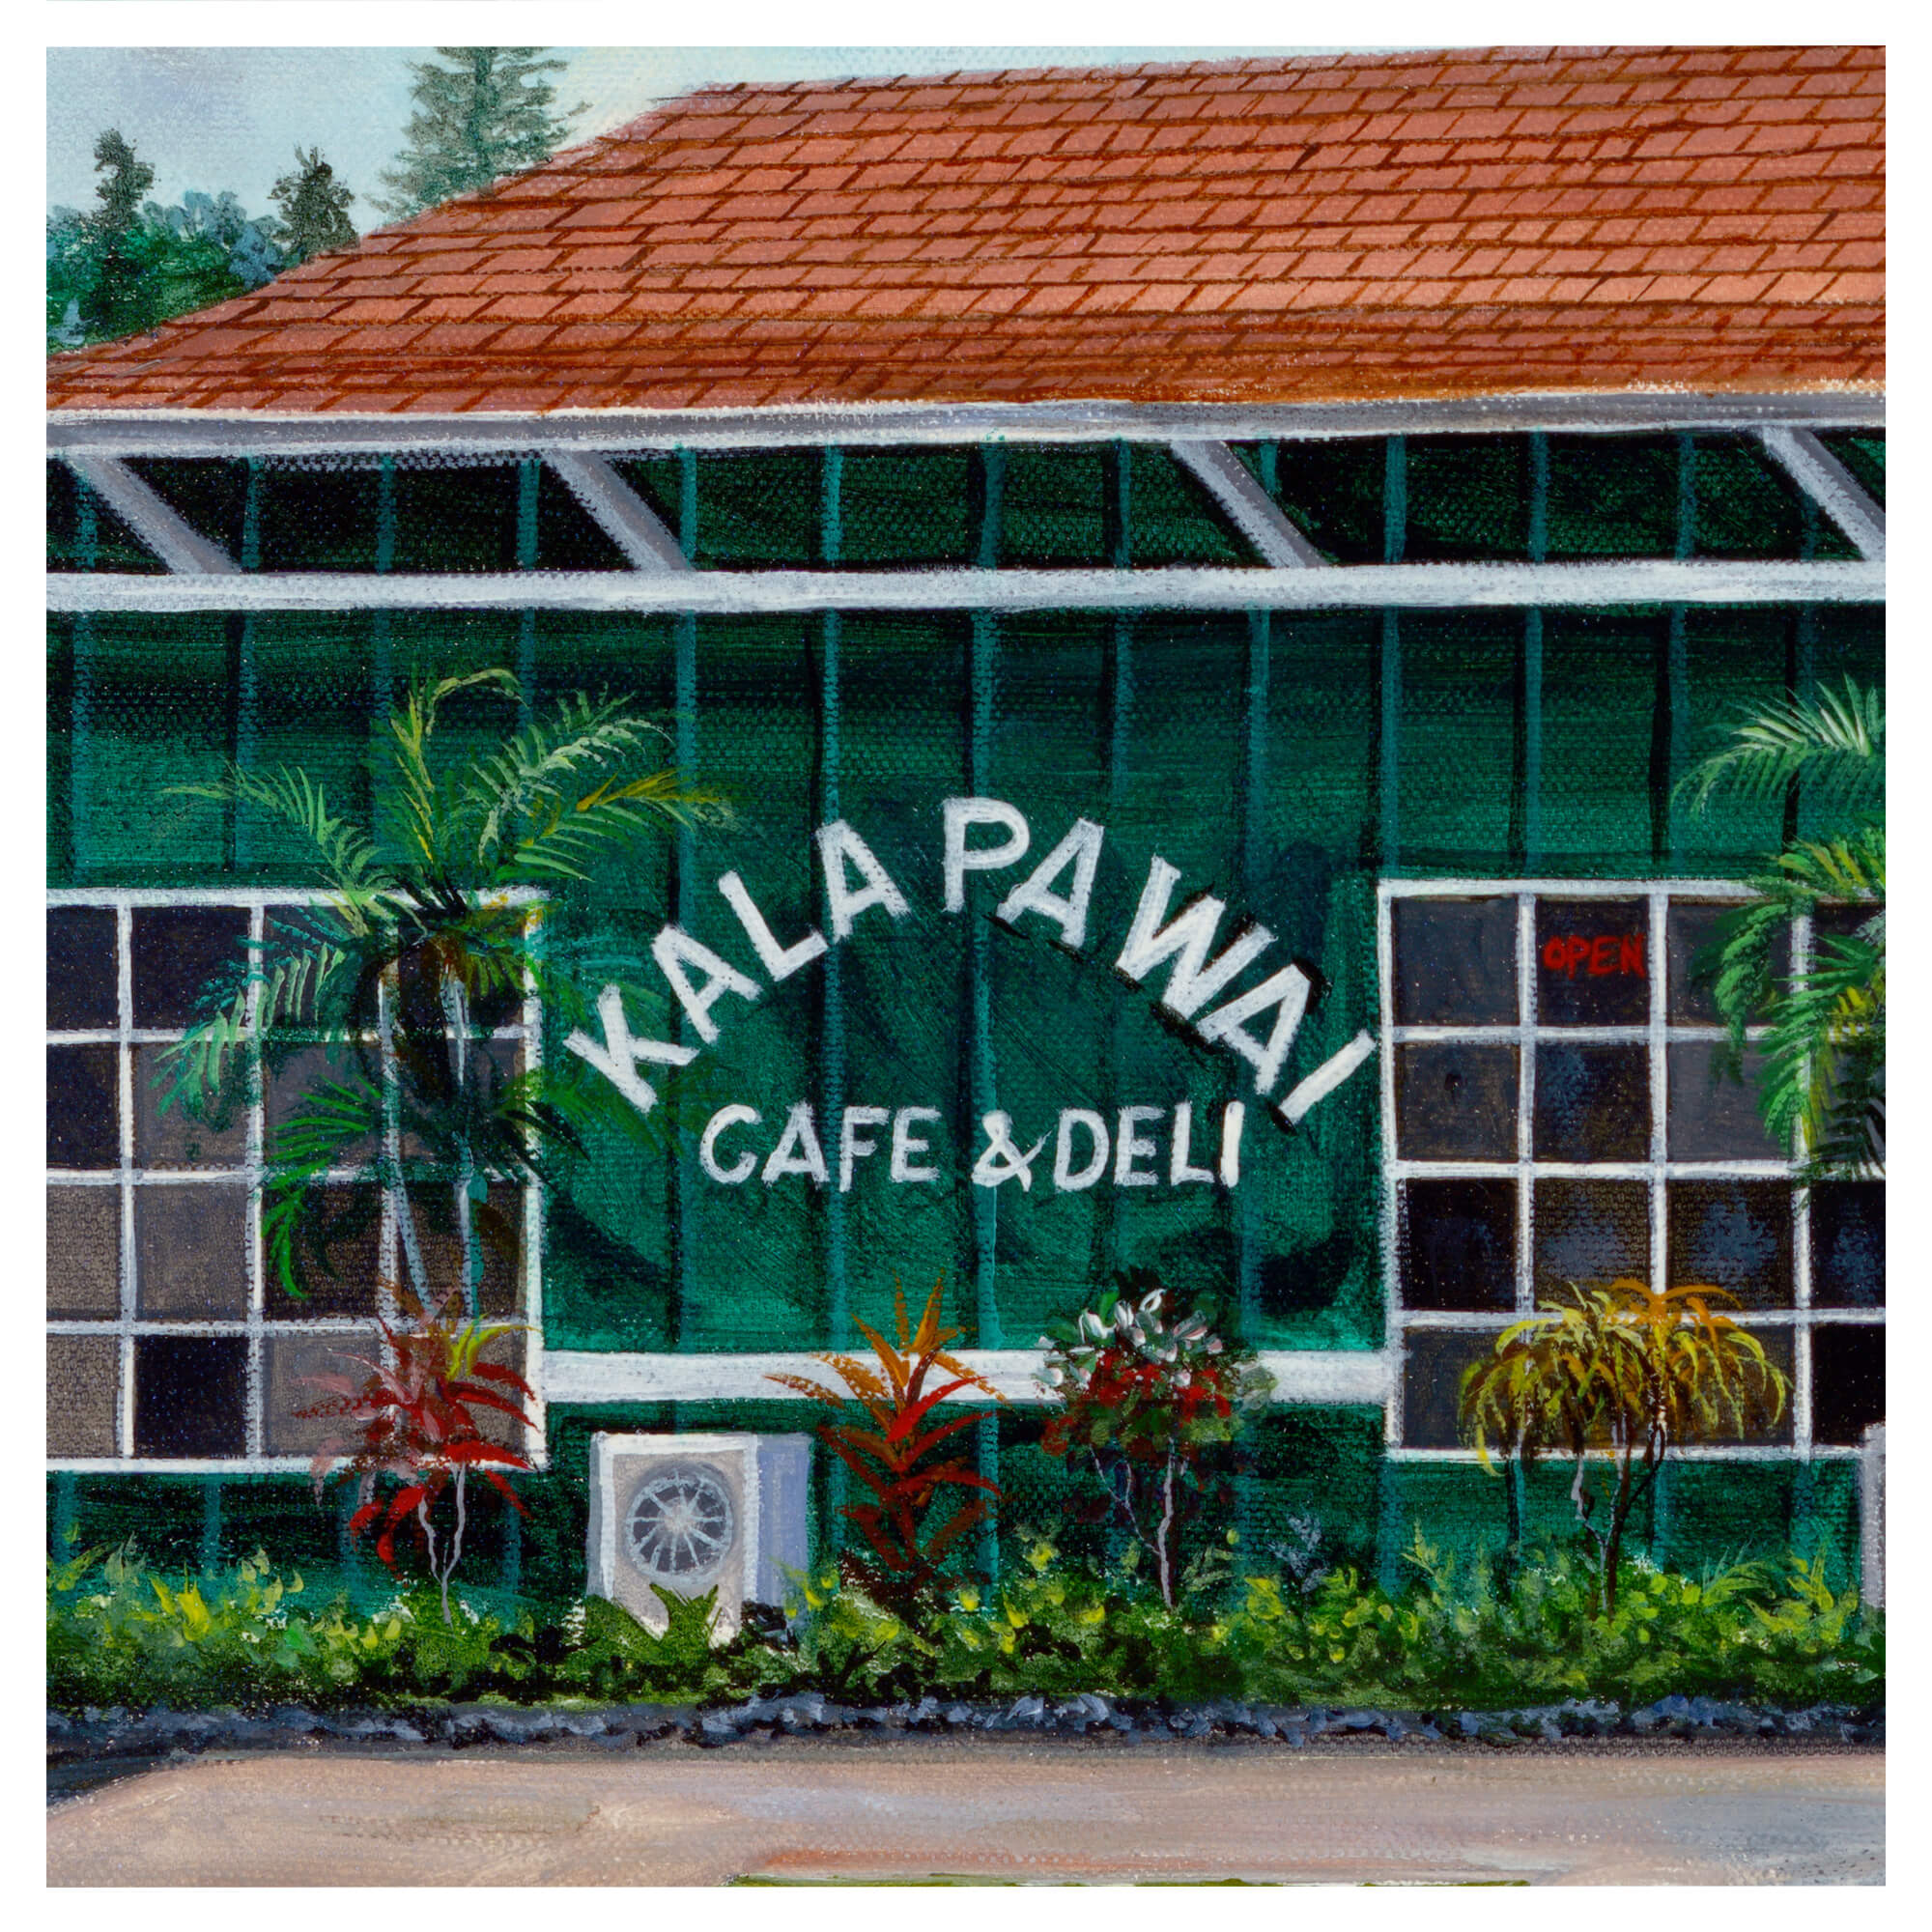 An illustration featuring kalawai cafe and deli by hawaii artist  Esperance Rakotonirina